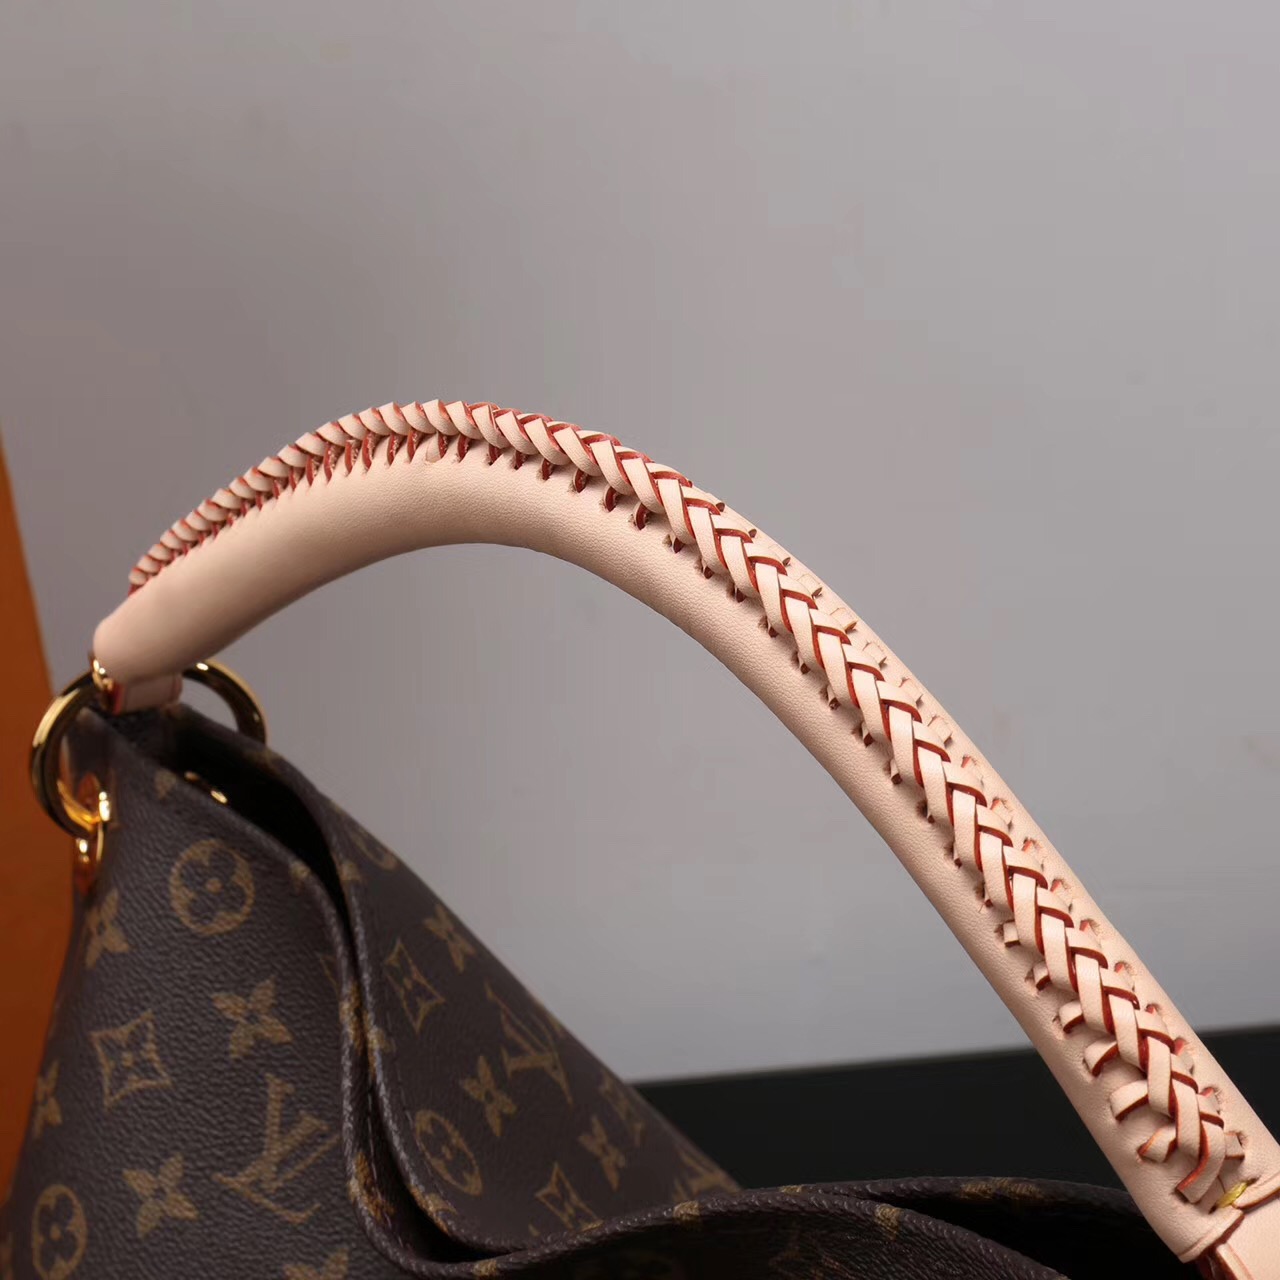 LV Louis Vuitton M40249 Monogram Artsy Handbags bags Brown